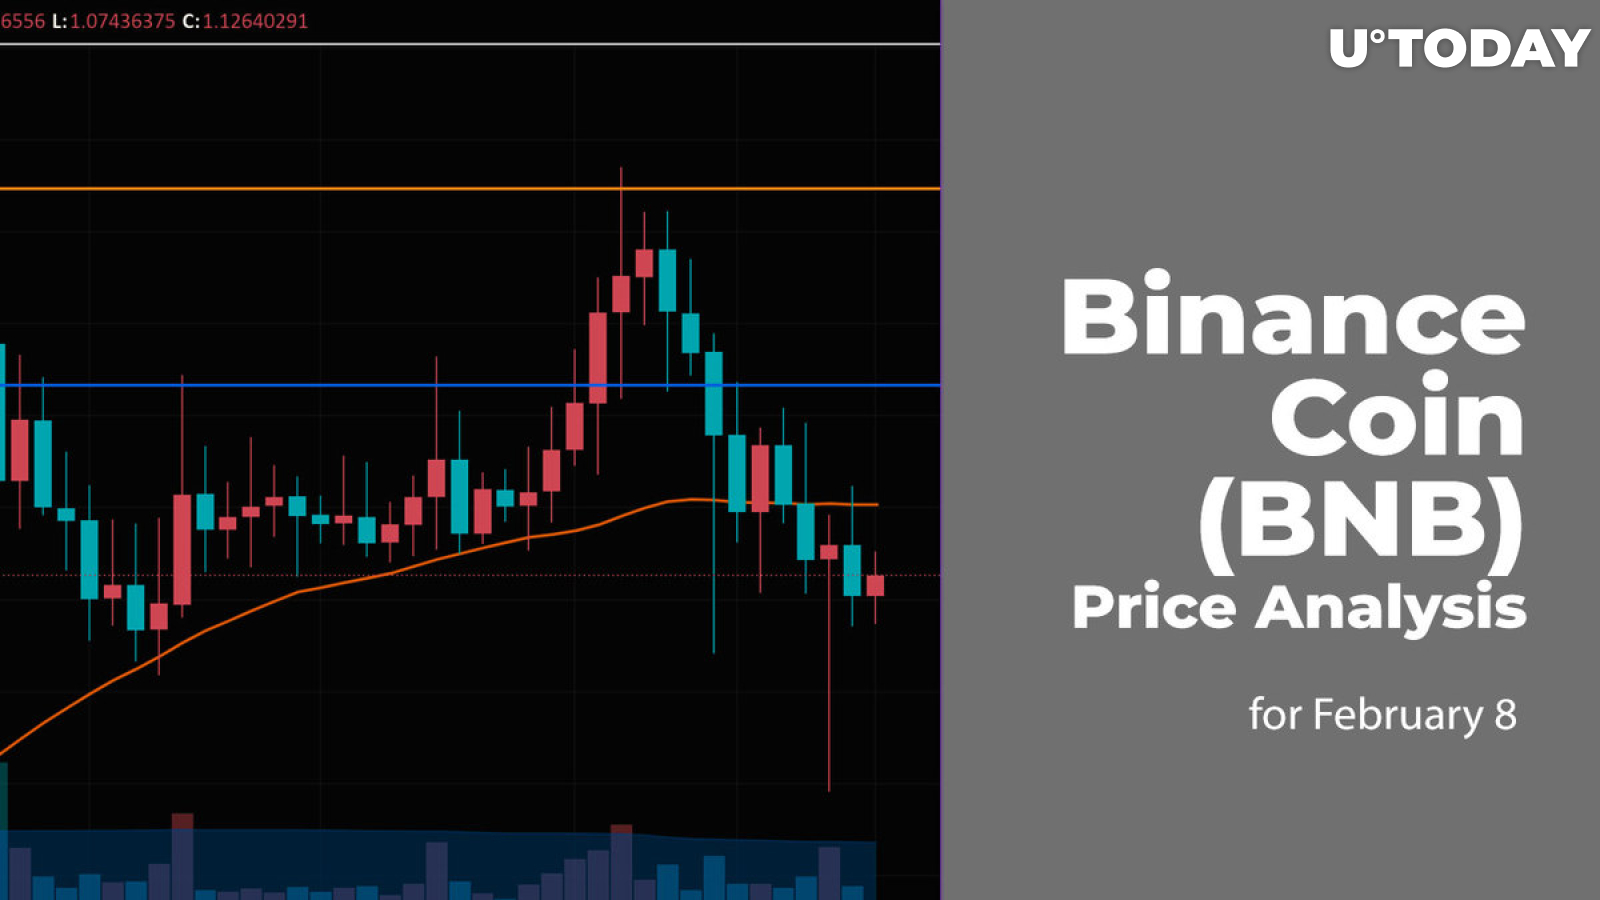 Binance Coin (BNB) Price Analysis for February 8